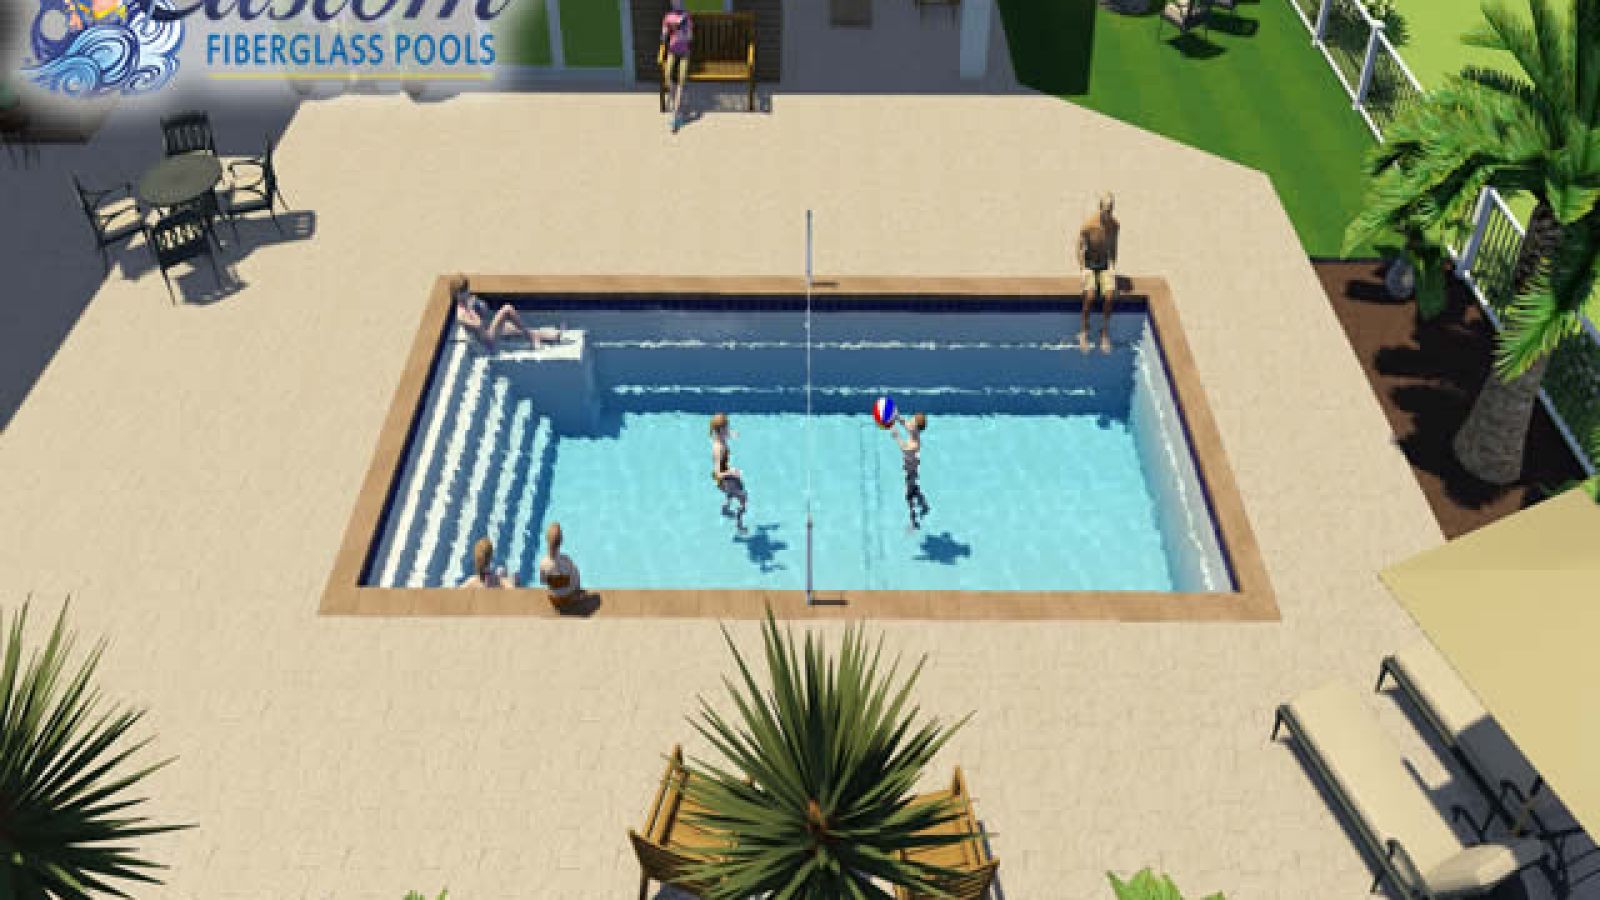 Montreal Sport Fiberglass Pool offering endless family fun in a Clarksville, TN backyard